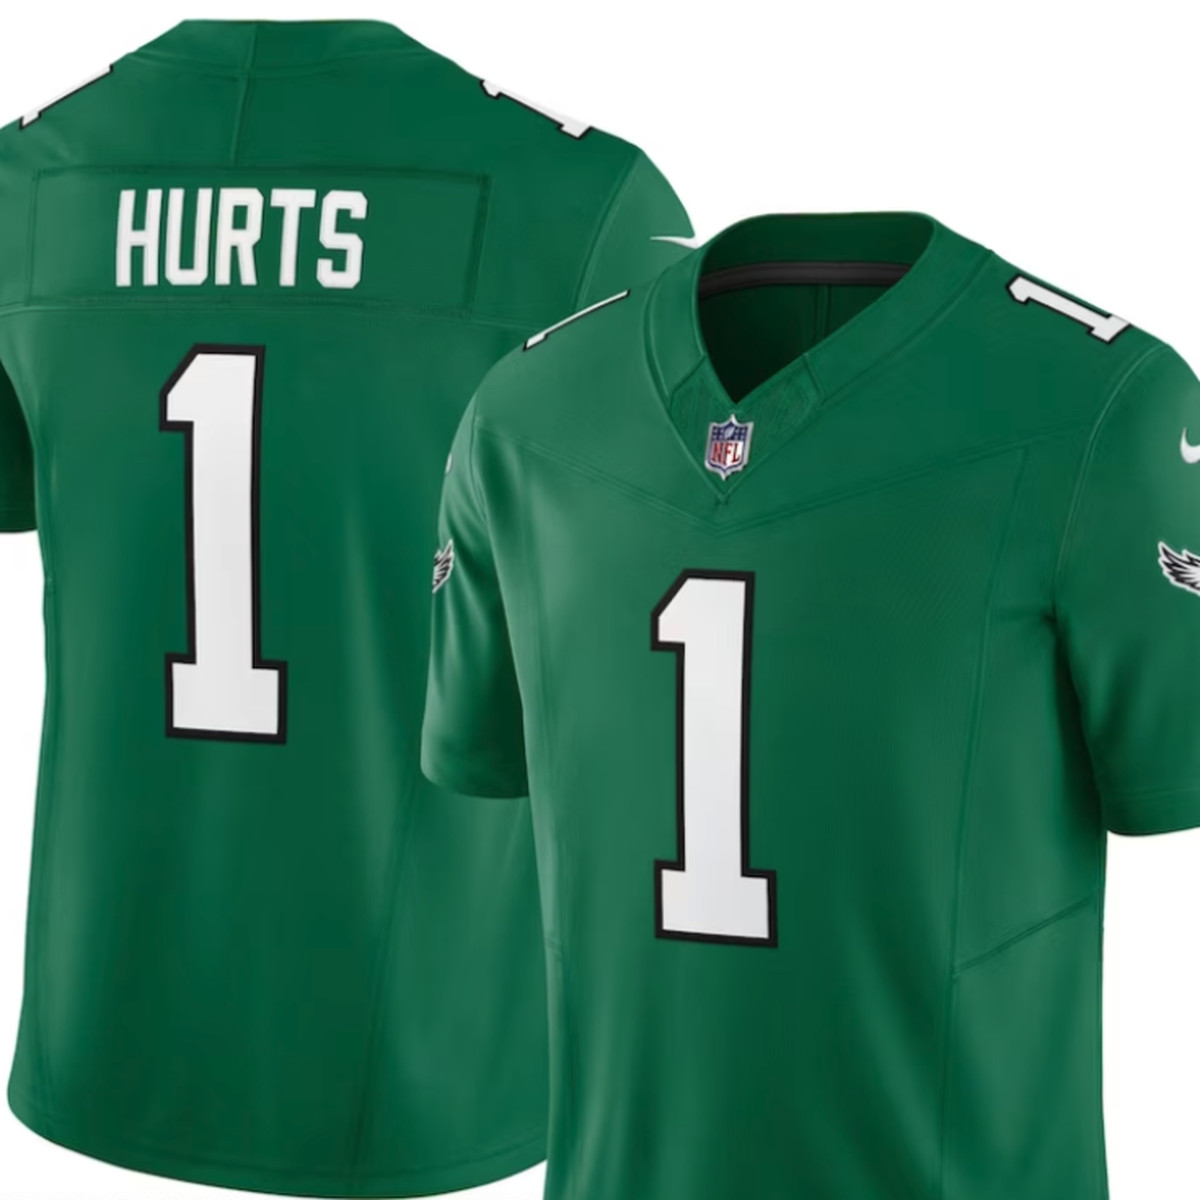 Eagles kelly green throwback alternate jerseys for sale - Bleeding